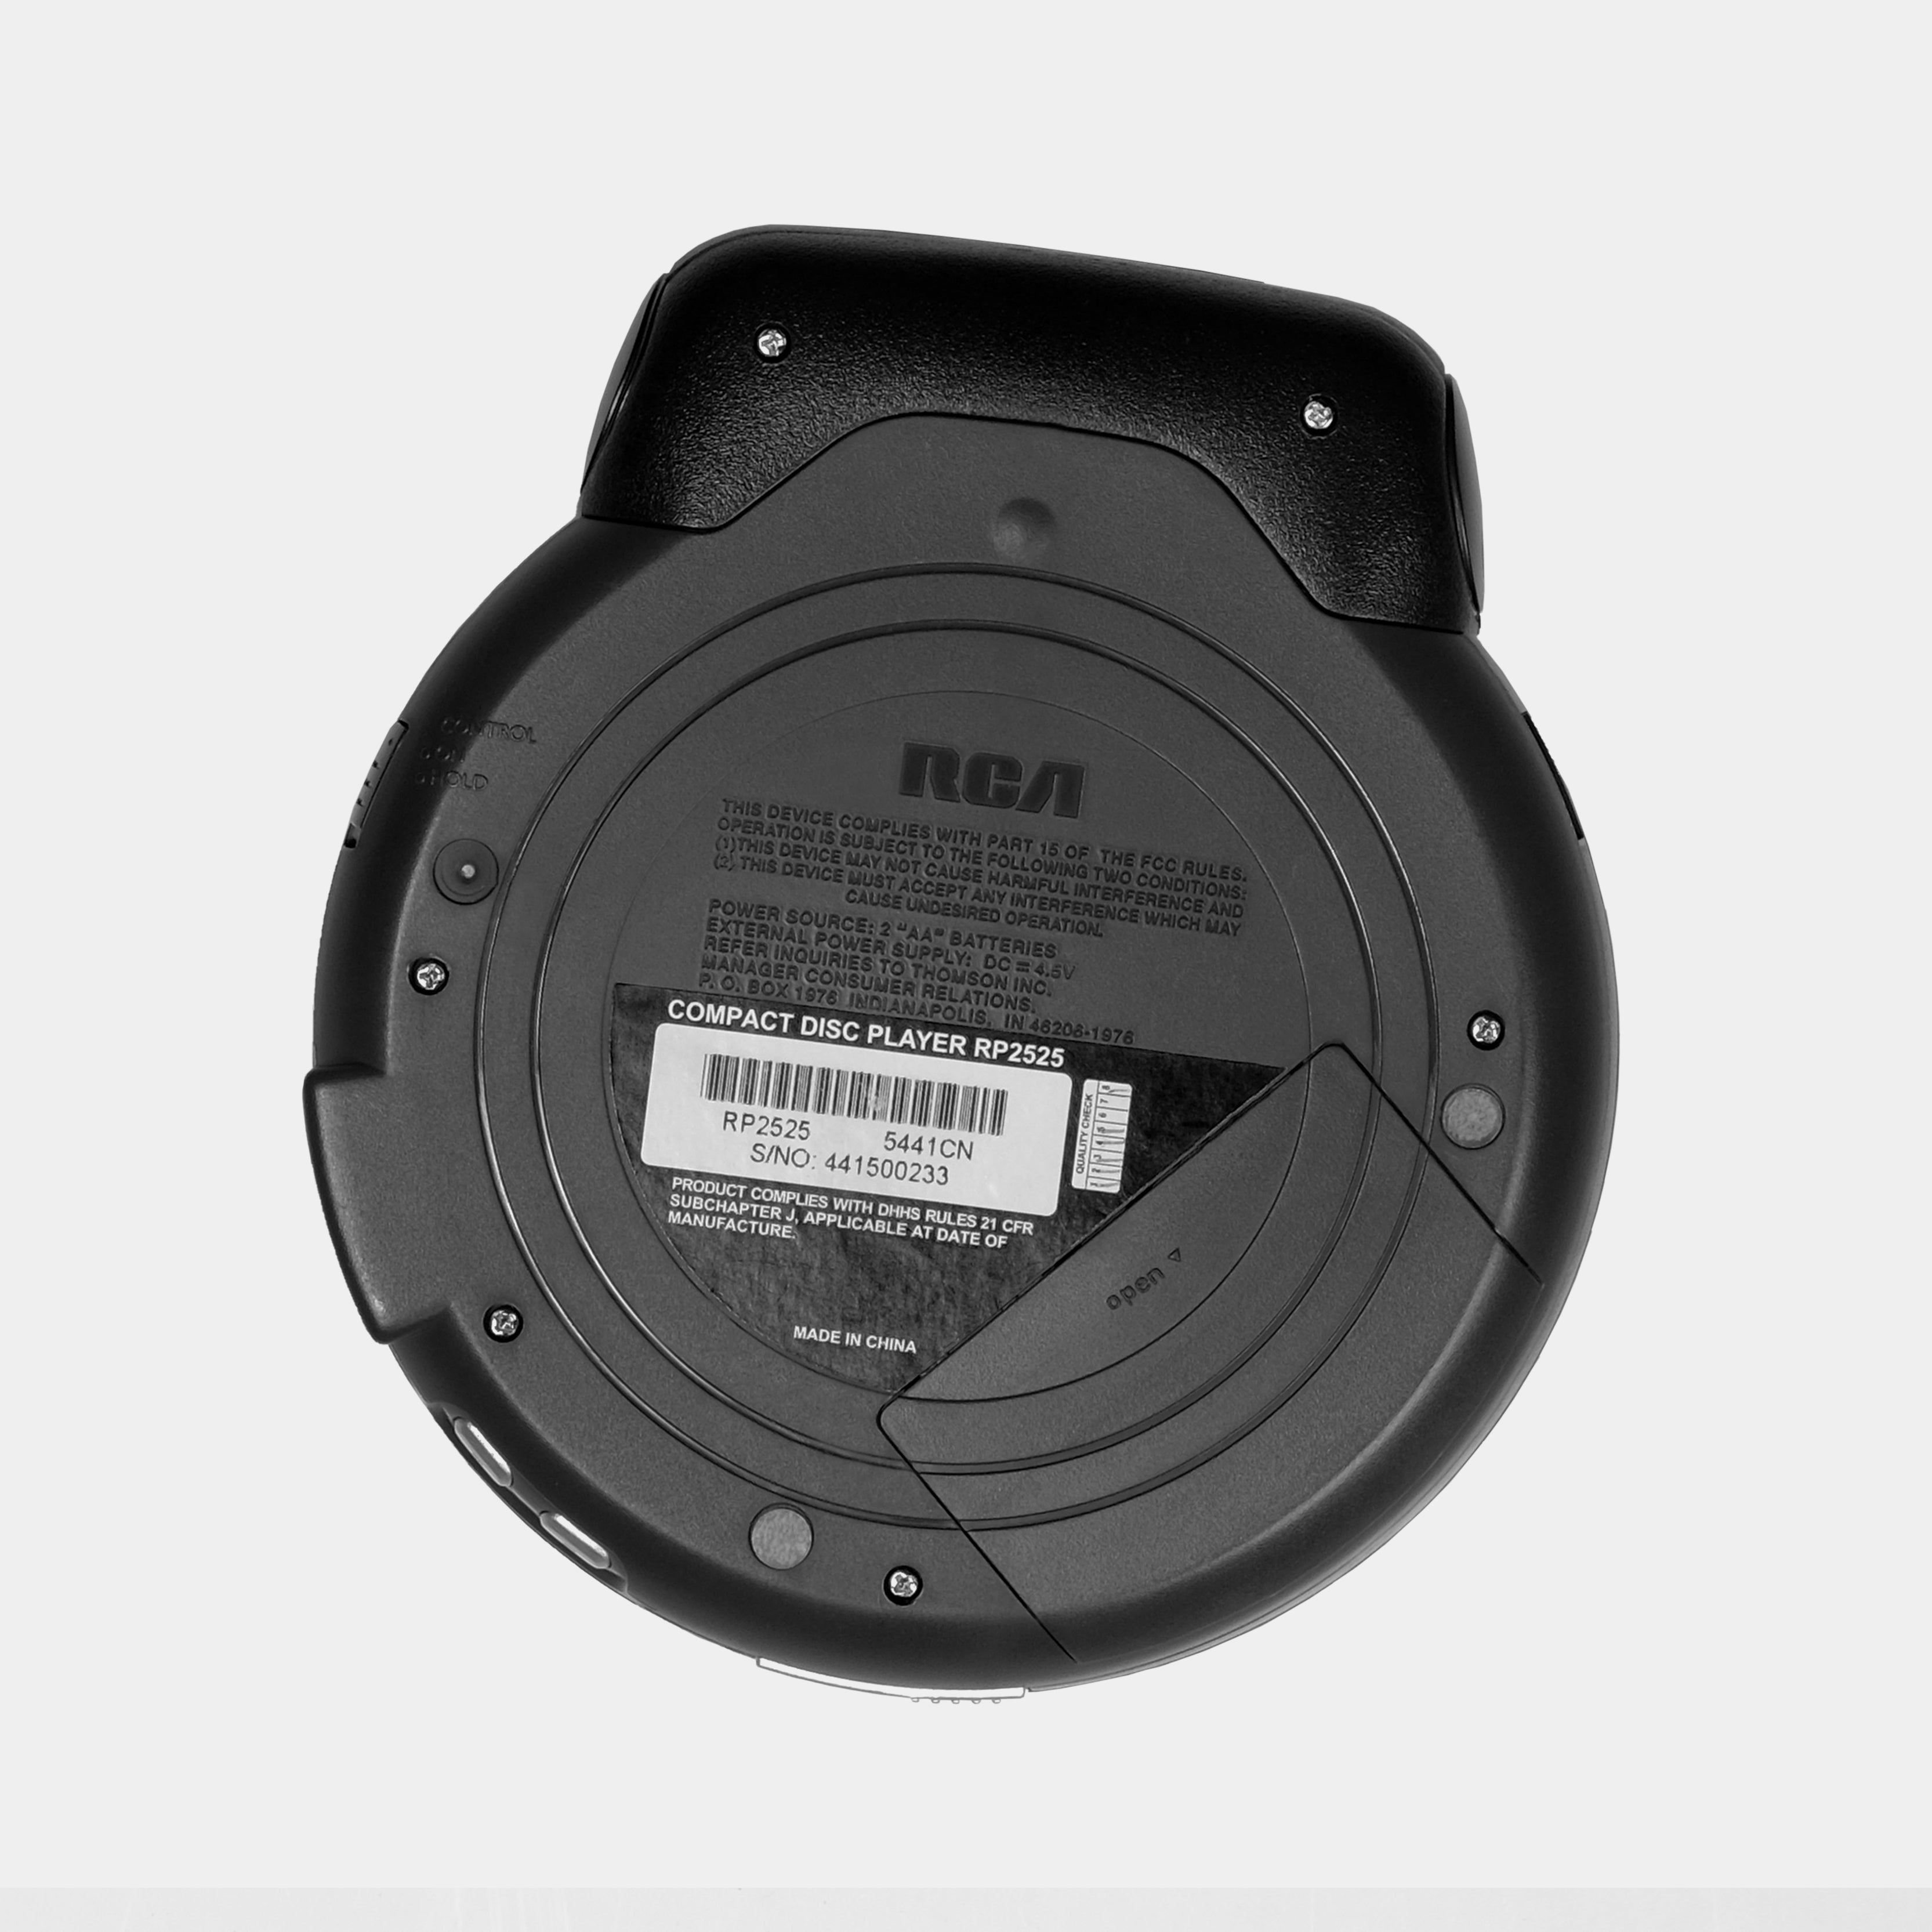 RCA RP2525 Portable CD Player